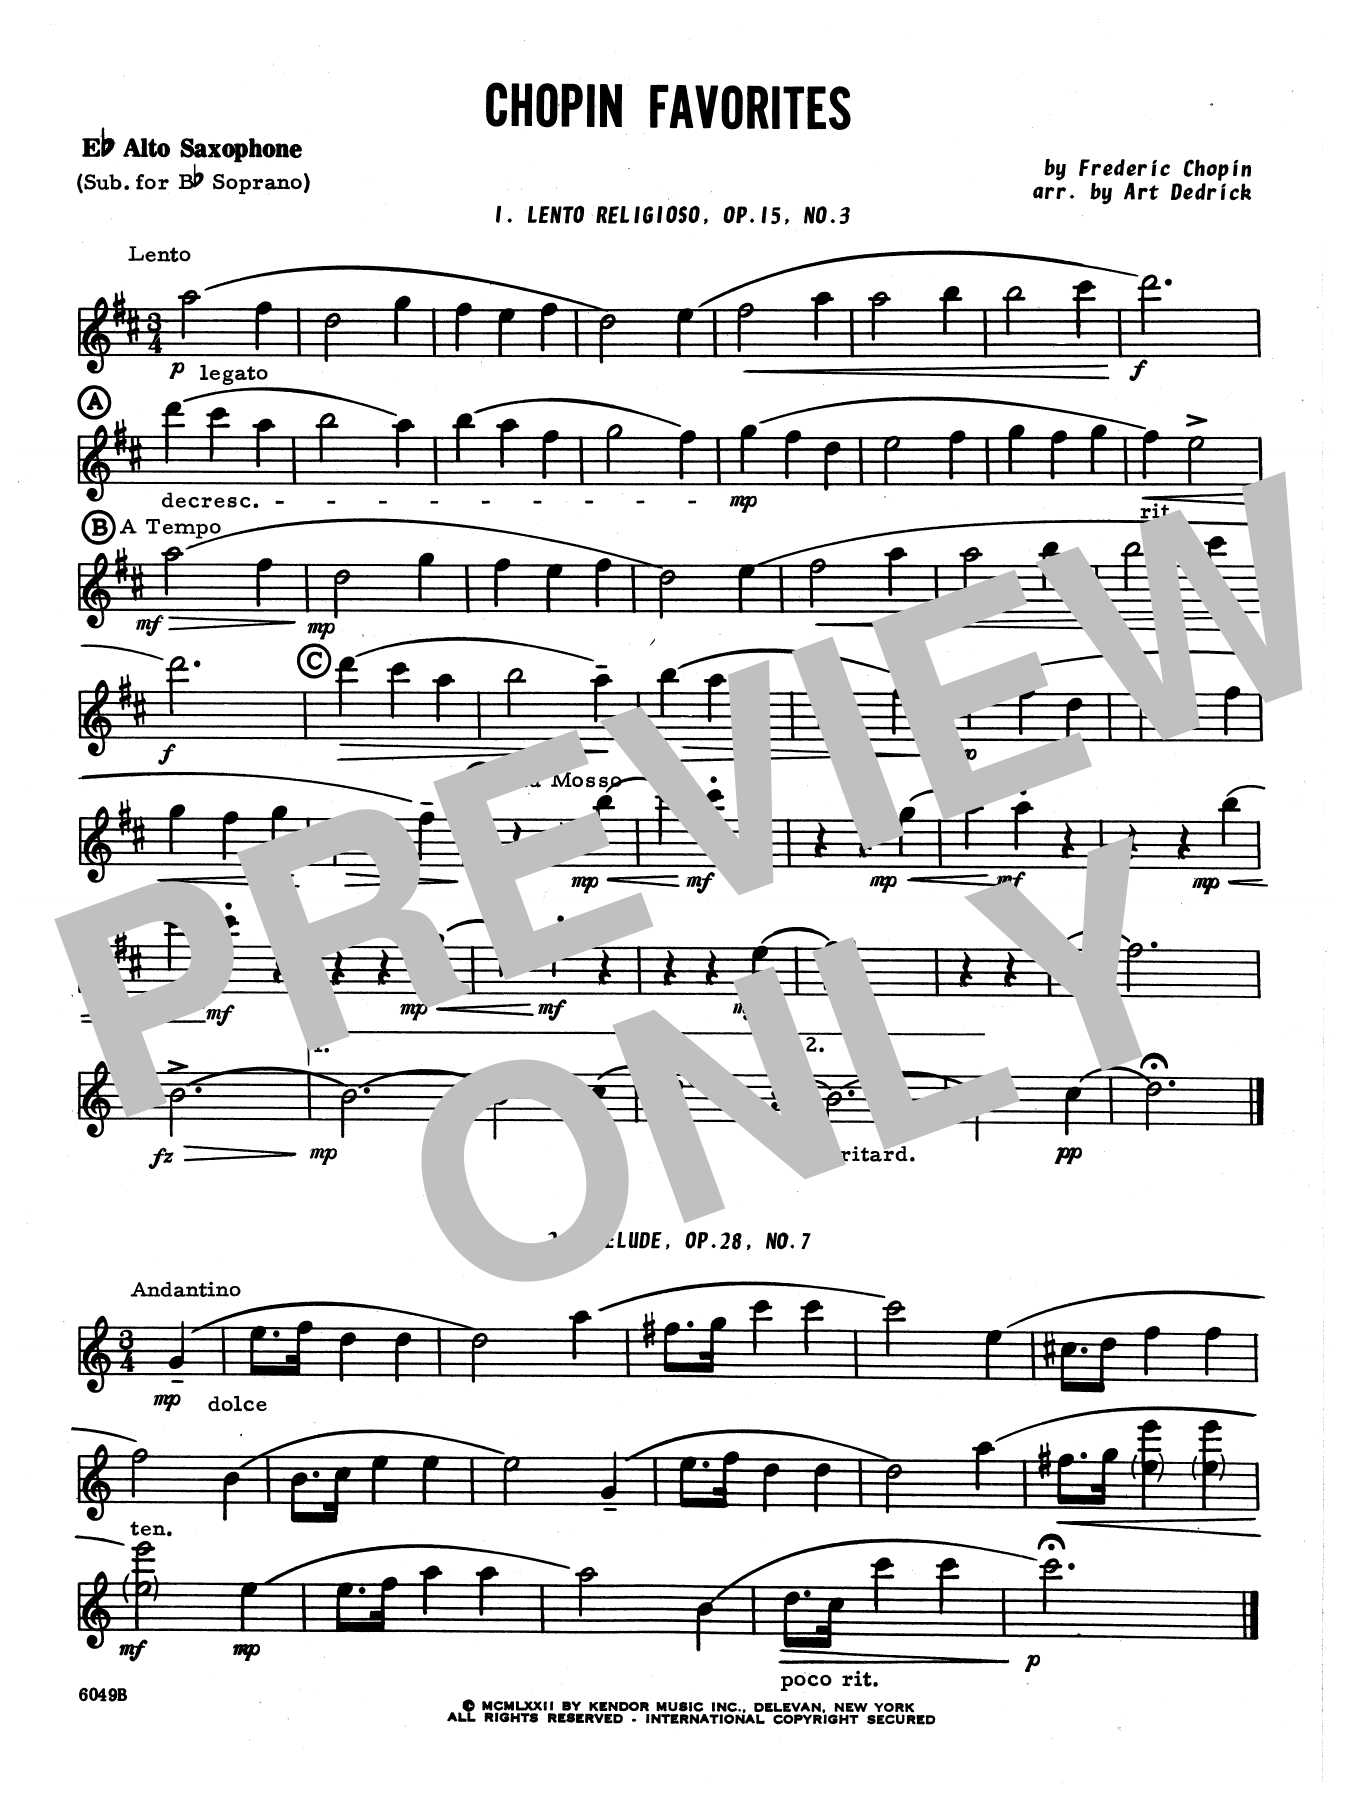 Art Dedrick Chopin Favorites - Opt. Alto Sax sheet music notes and chords. Download Printable PDF.